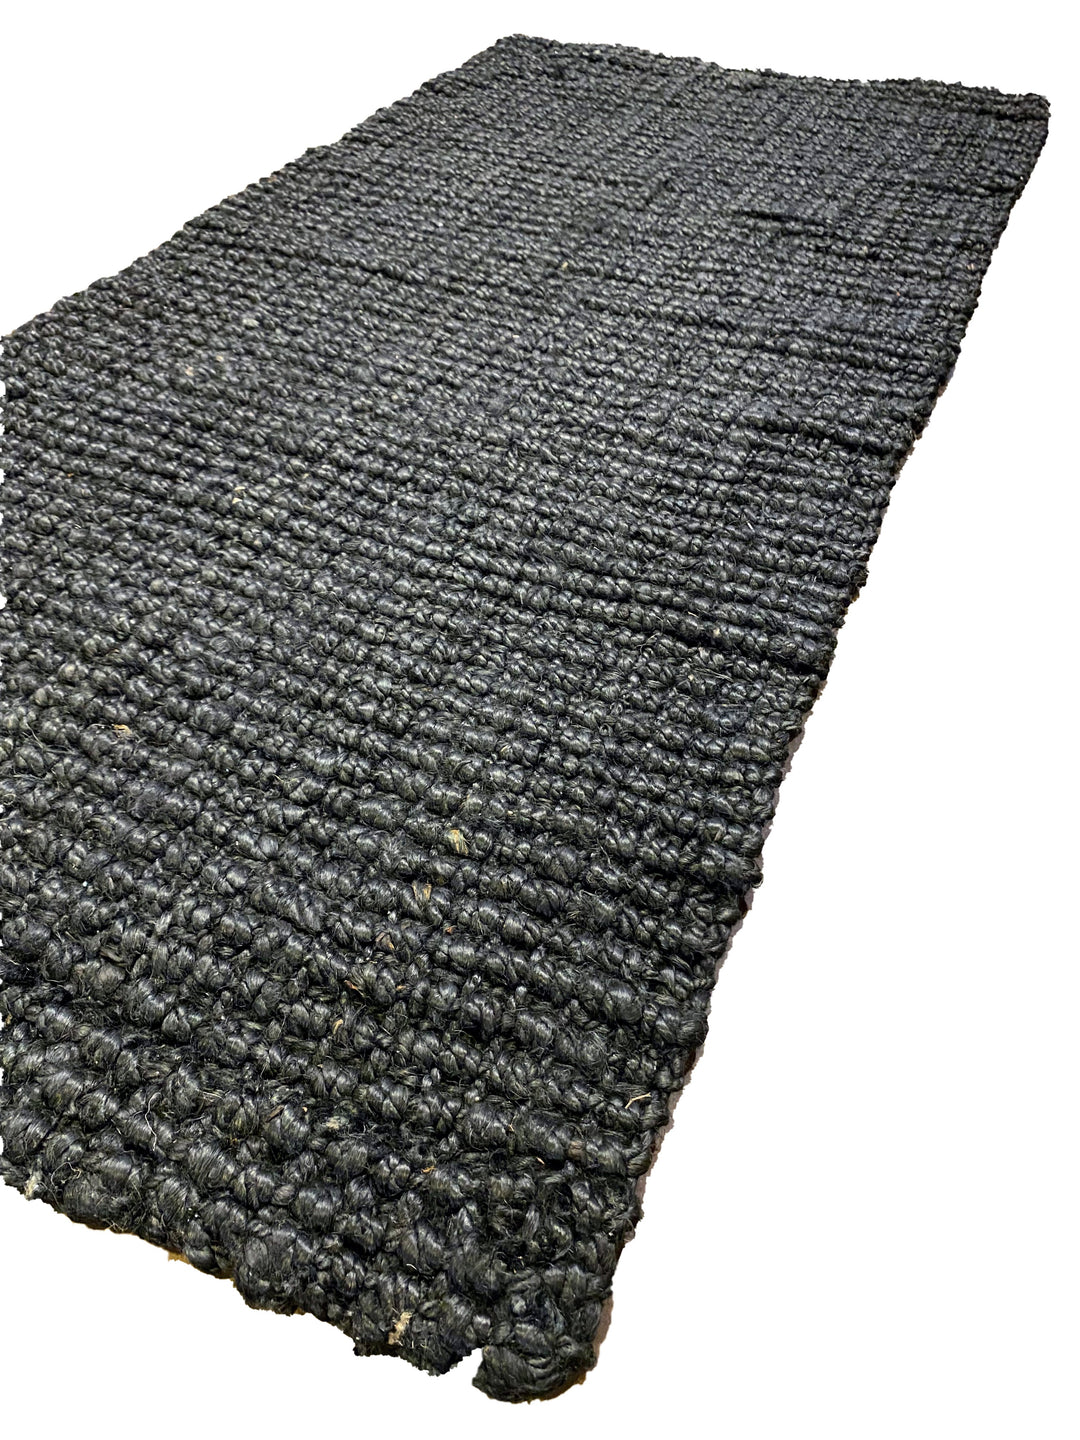 Kanan - Size: 4.9 x 2.3 - Imam Carpet Co